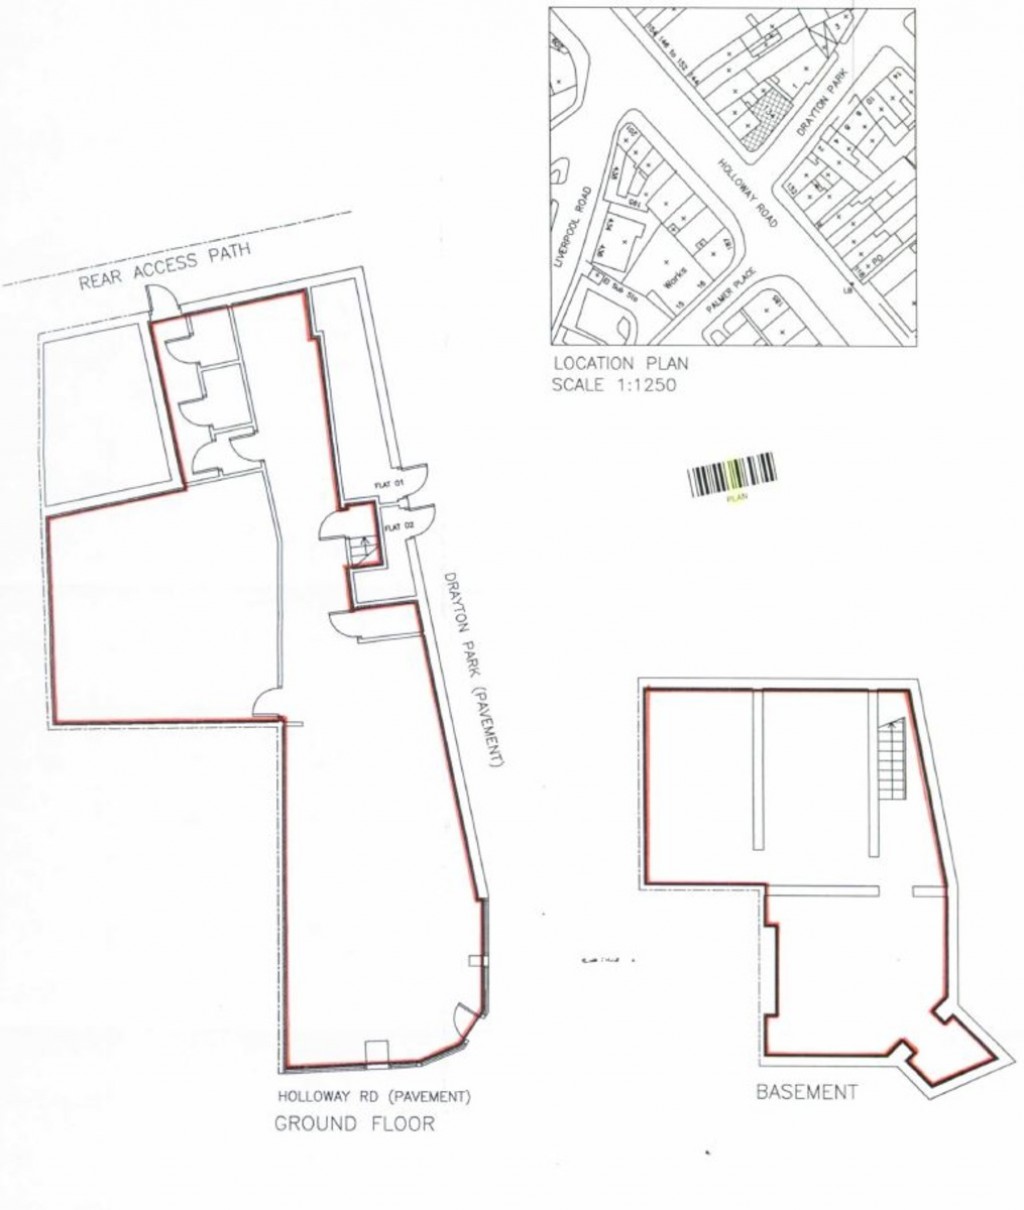 Floorplans For Holloway Road, Holloway